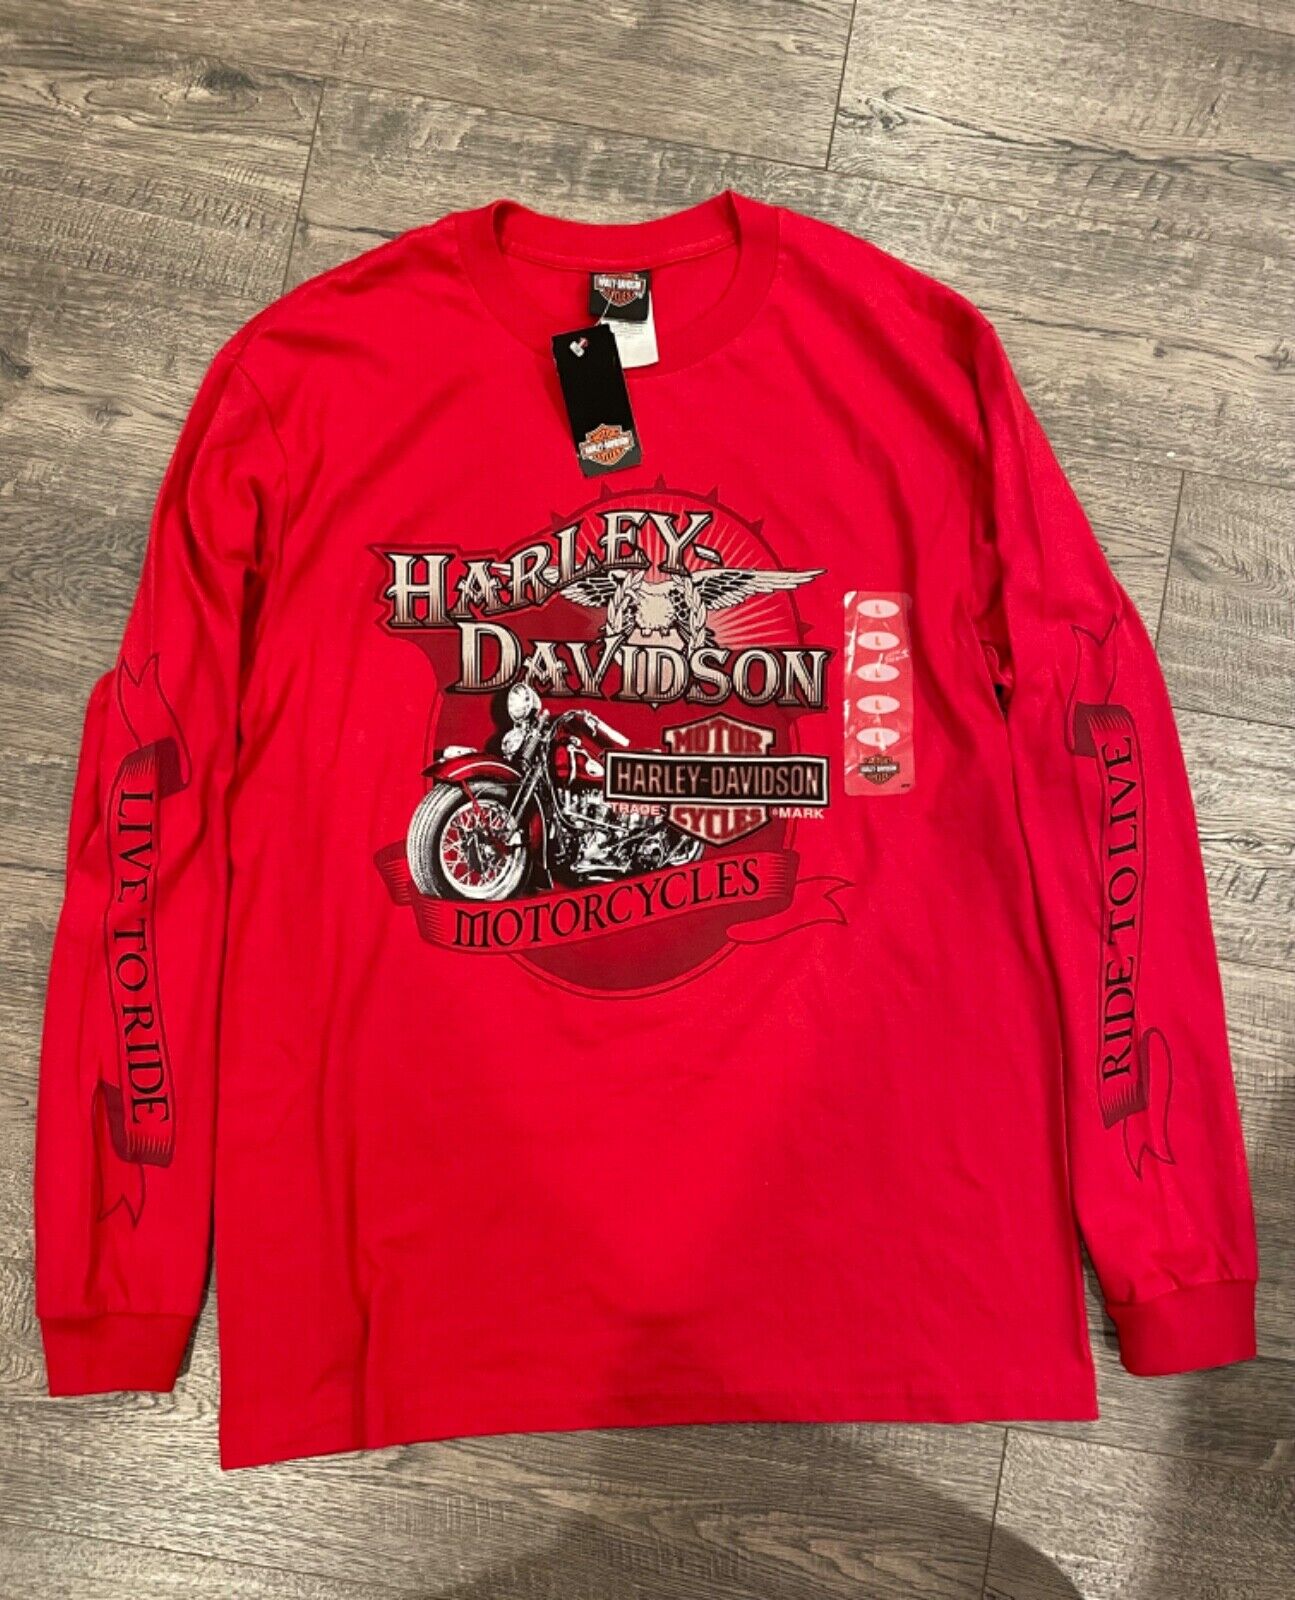 New 2010 Harley Davidson Big Moose Portland Maine Mens Long Sleeve T-Shirt Large